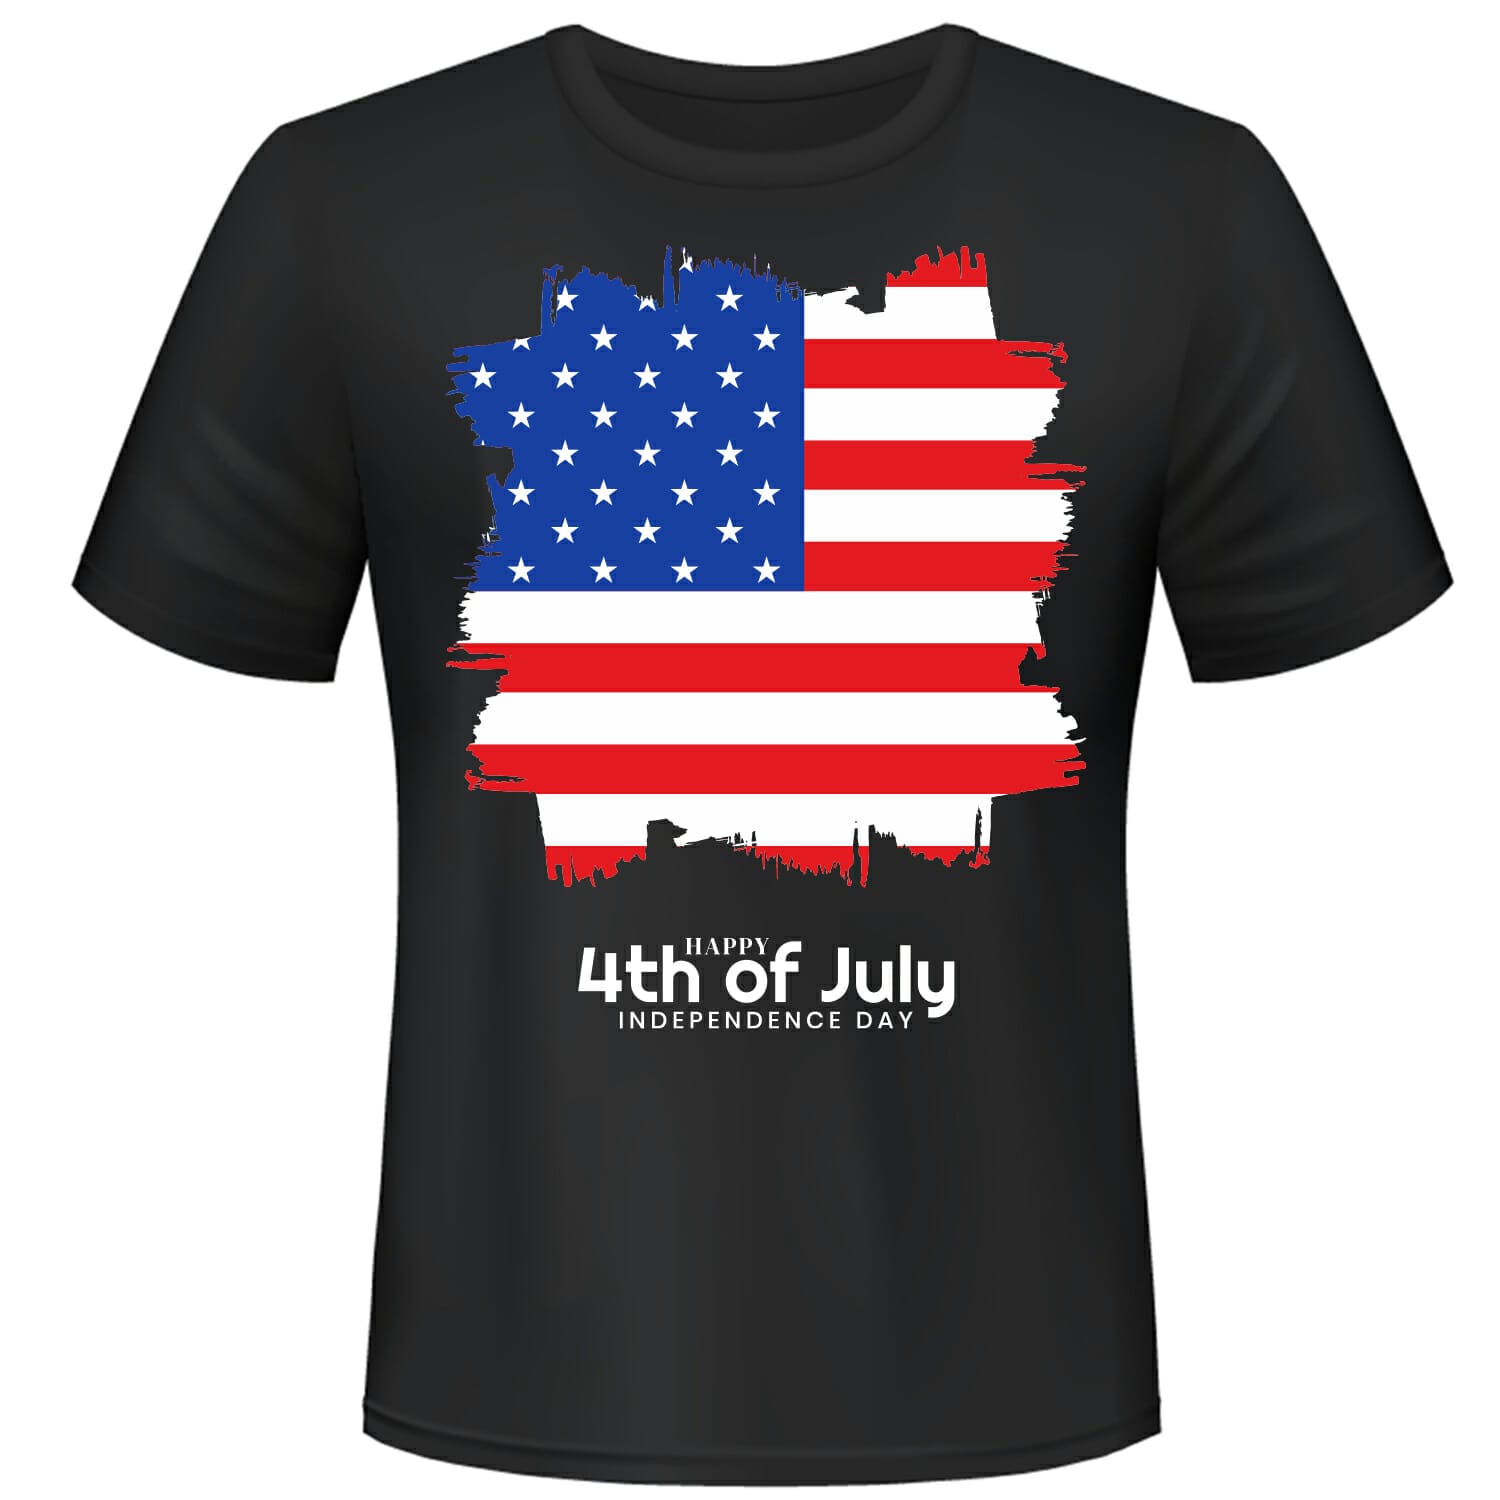 4th of July tshirt design